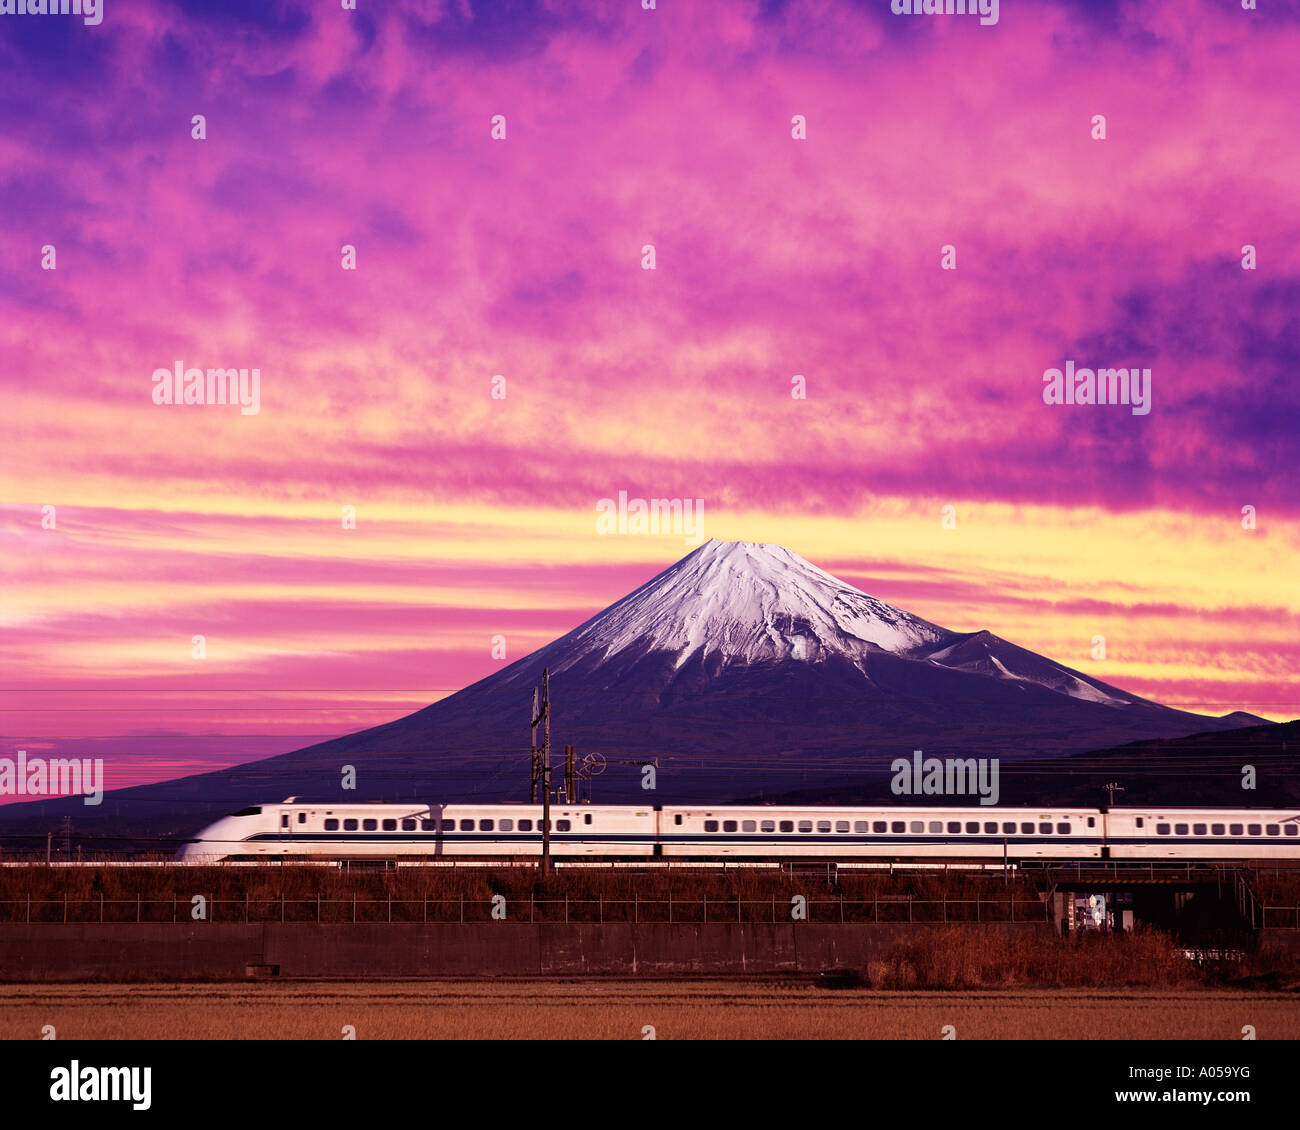 Mount Fuji & Bullet Train, Sunset Stock Photo - Alamy